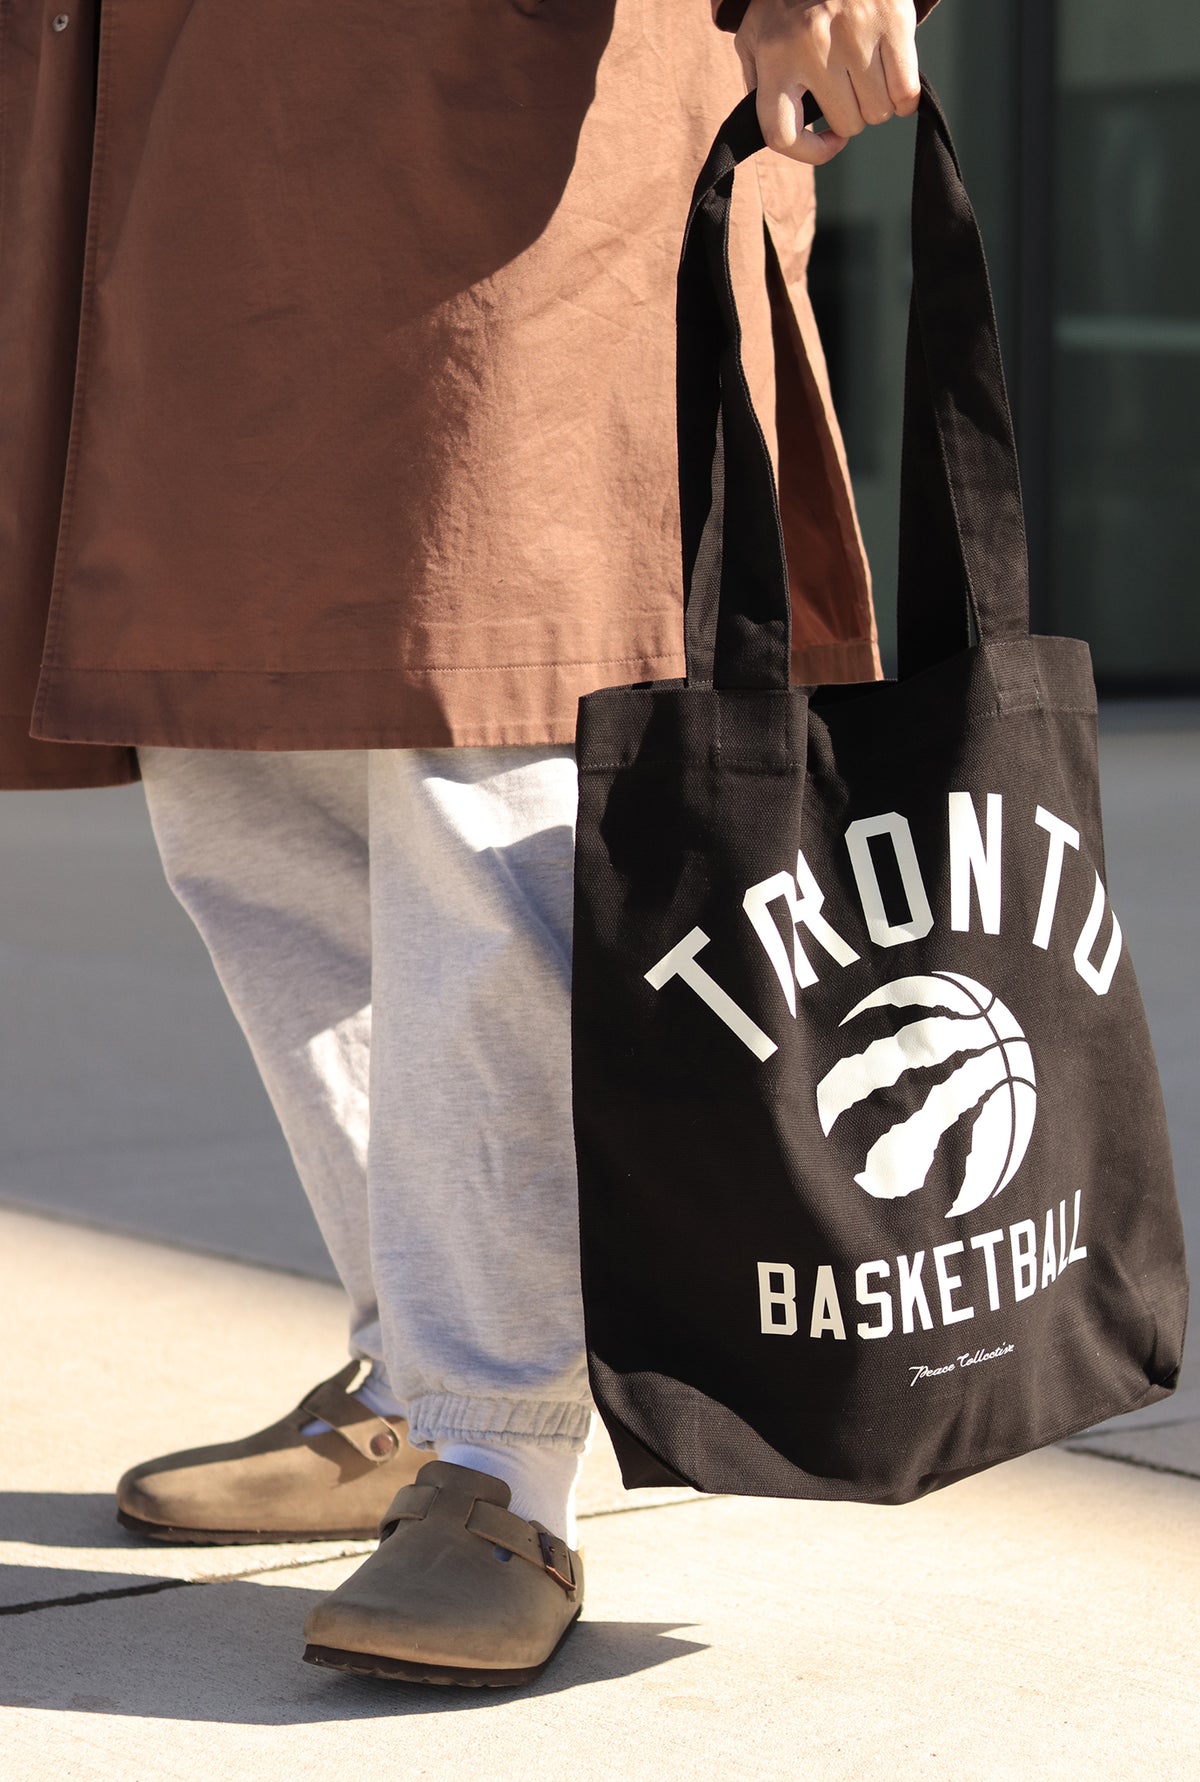 Toronto Raptors Tote Bag - Black